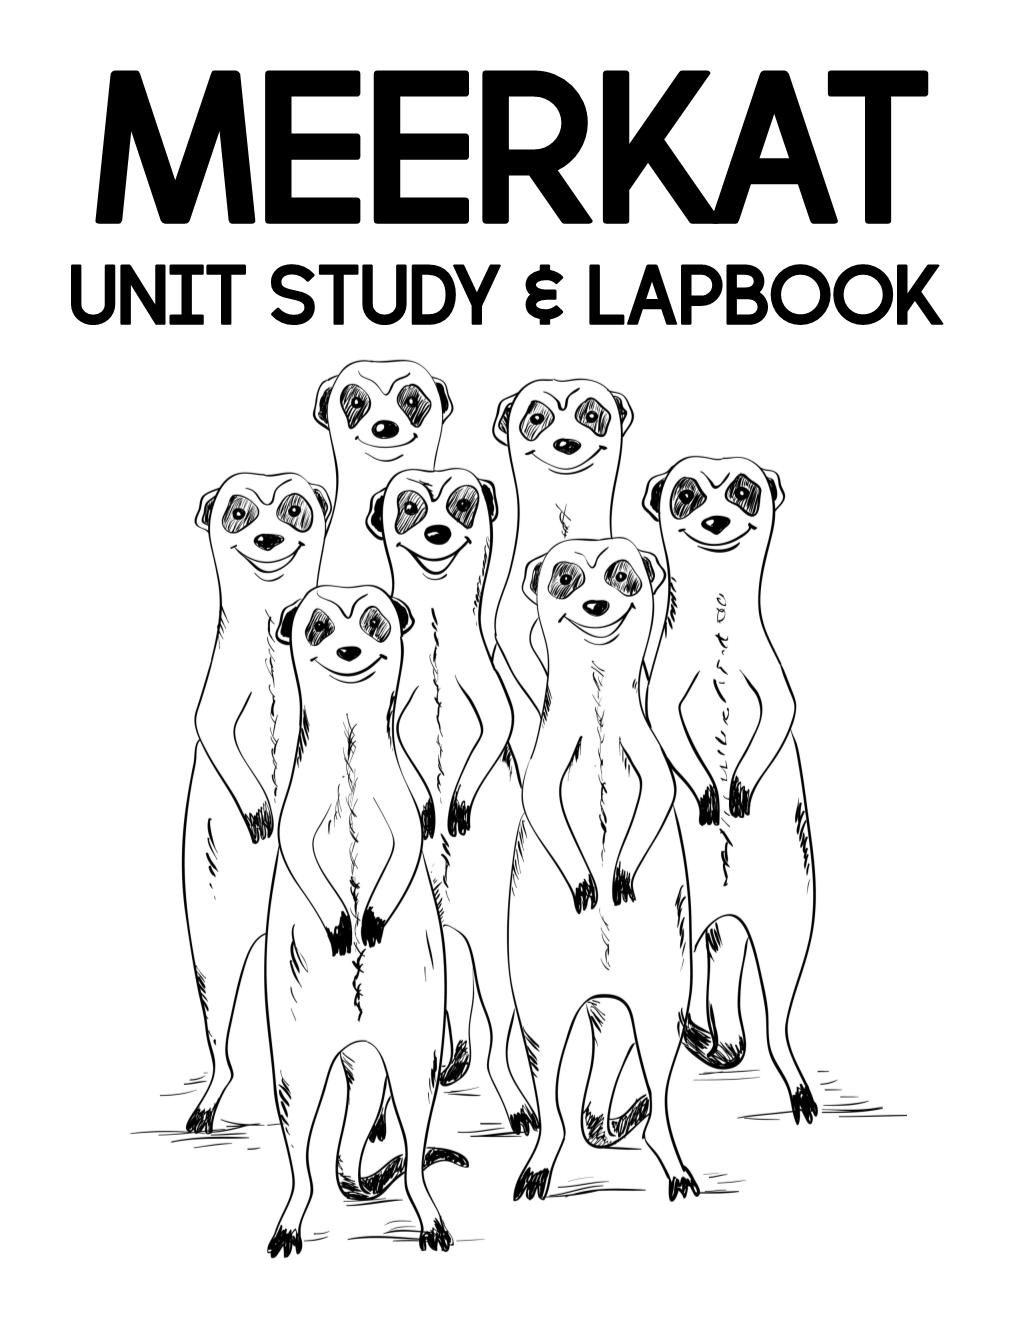 Meerkat Unit Study and Lapbook Lessons